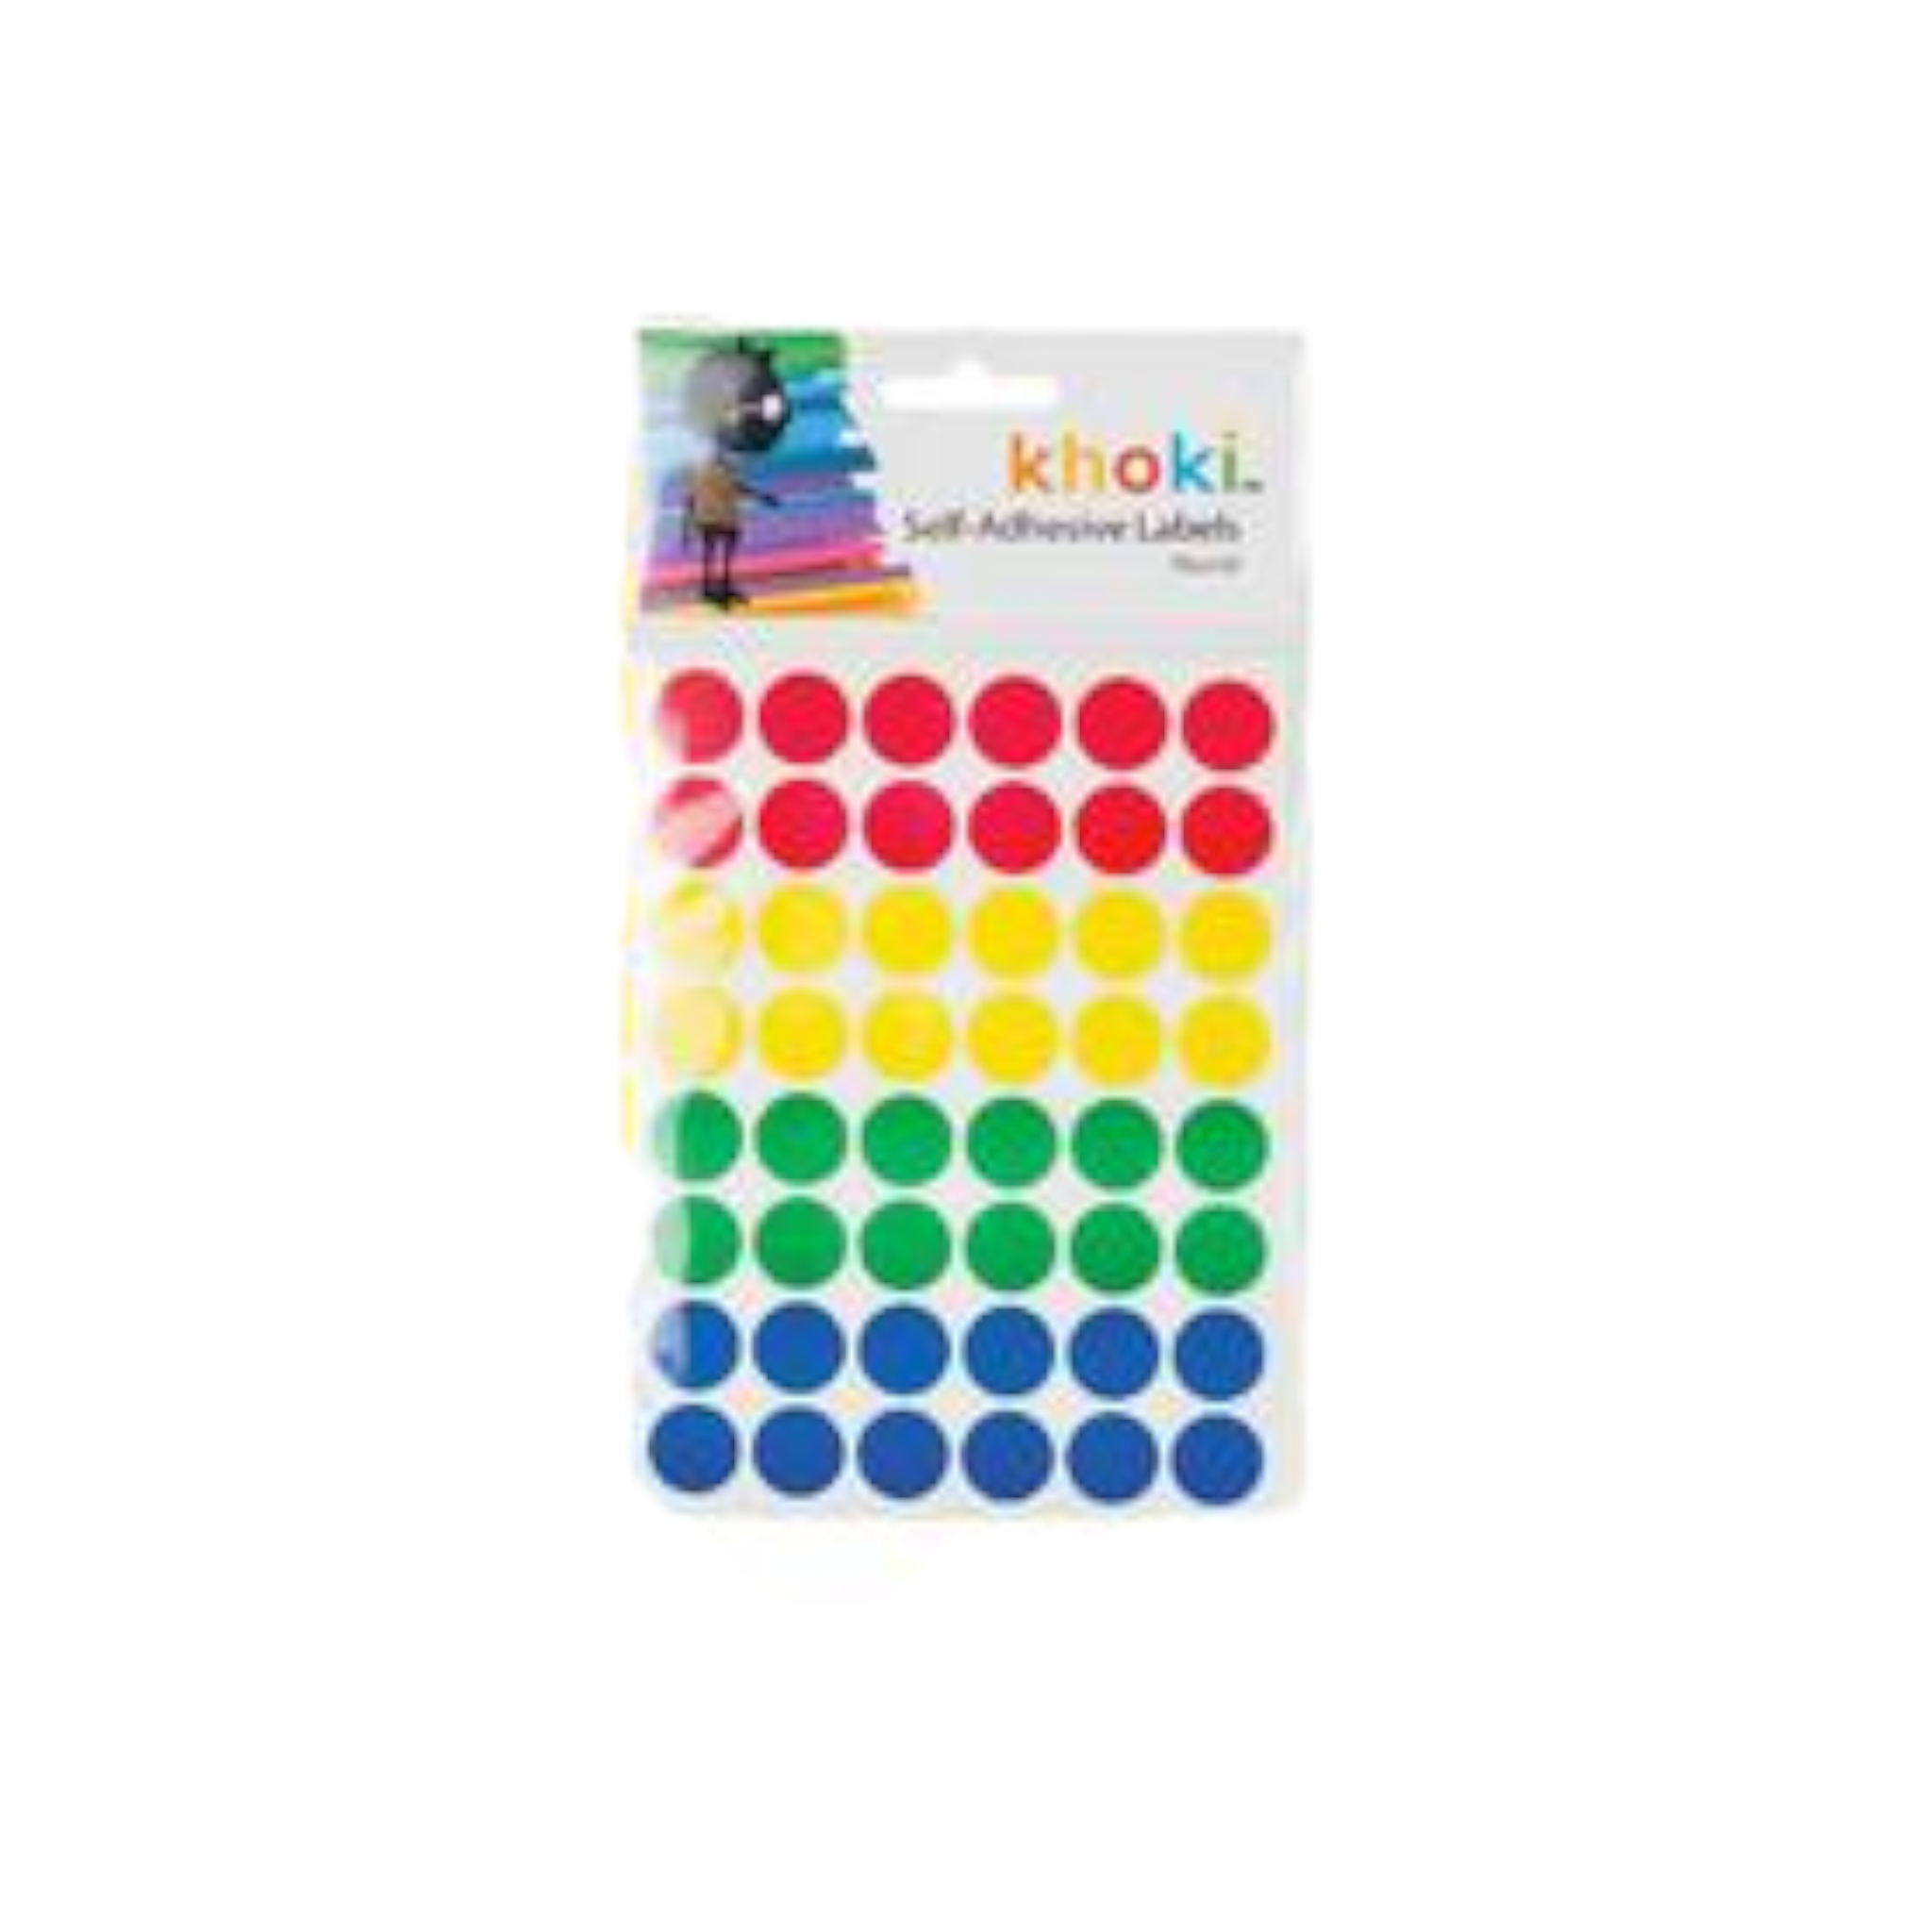 Khoki Self Adhesive Labels Dot Round 40Pcs